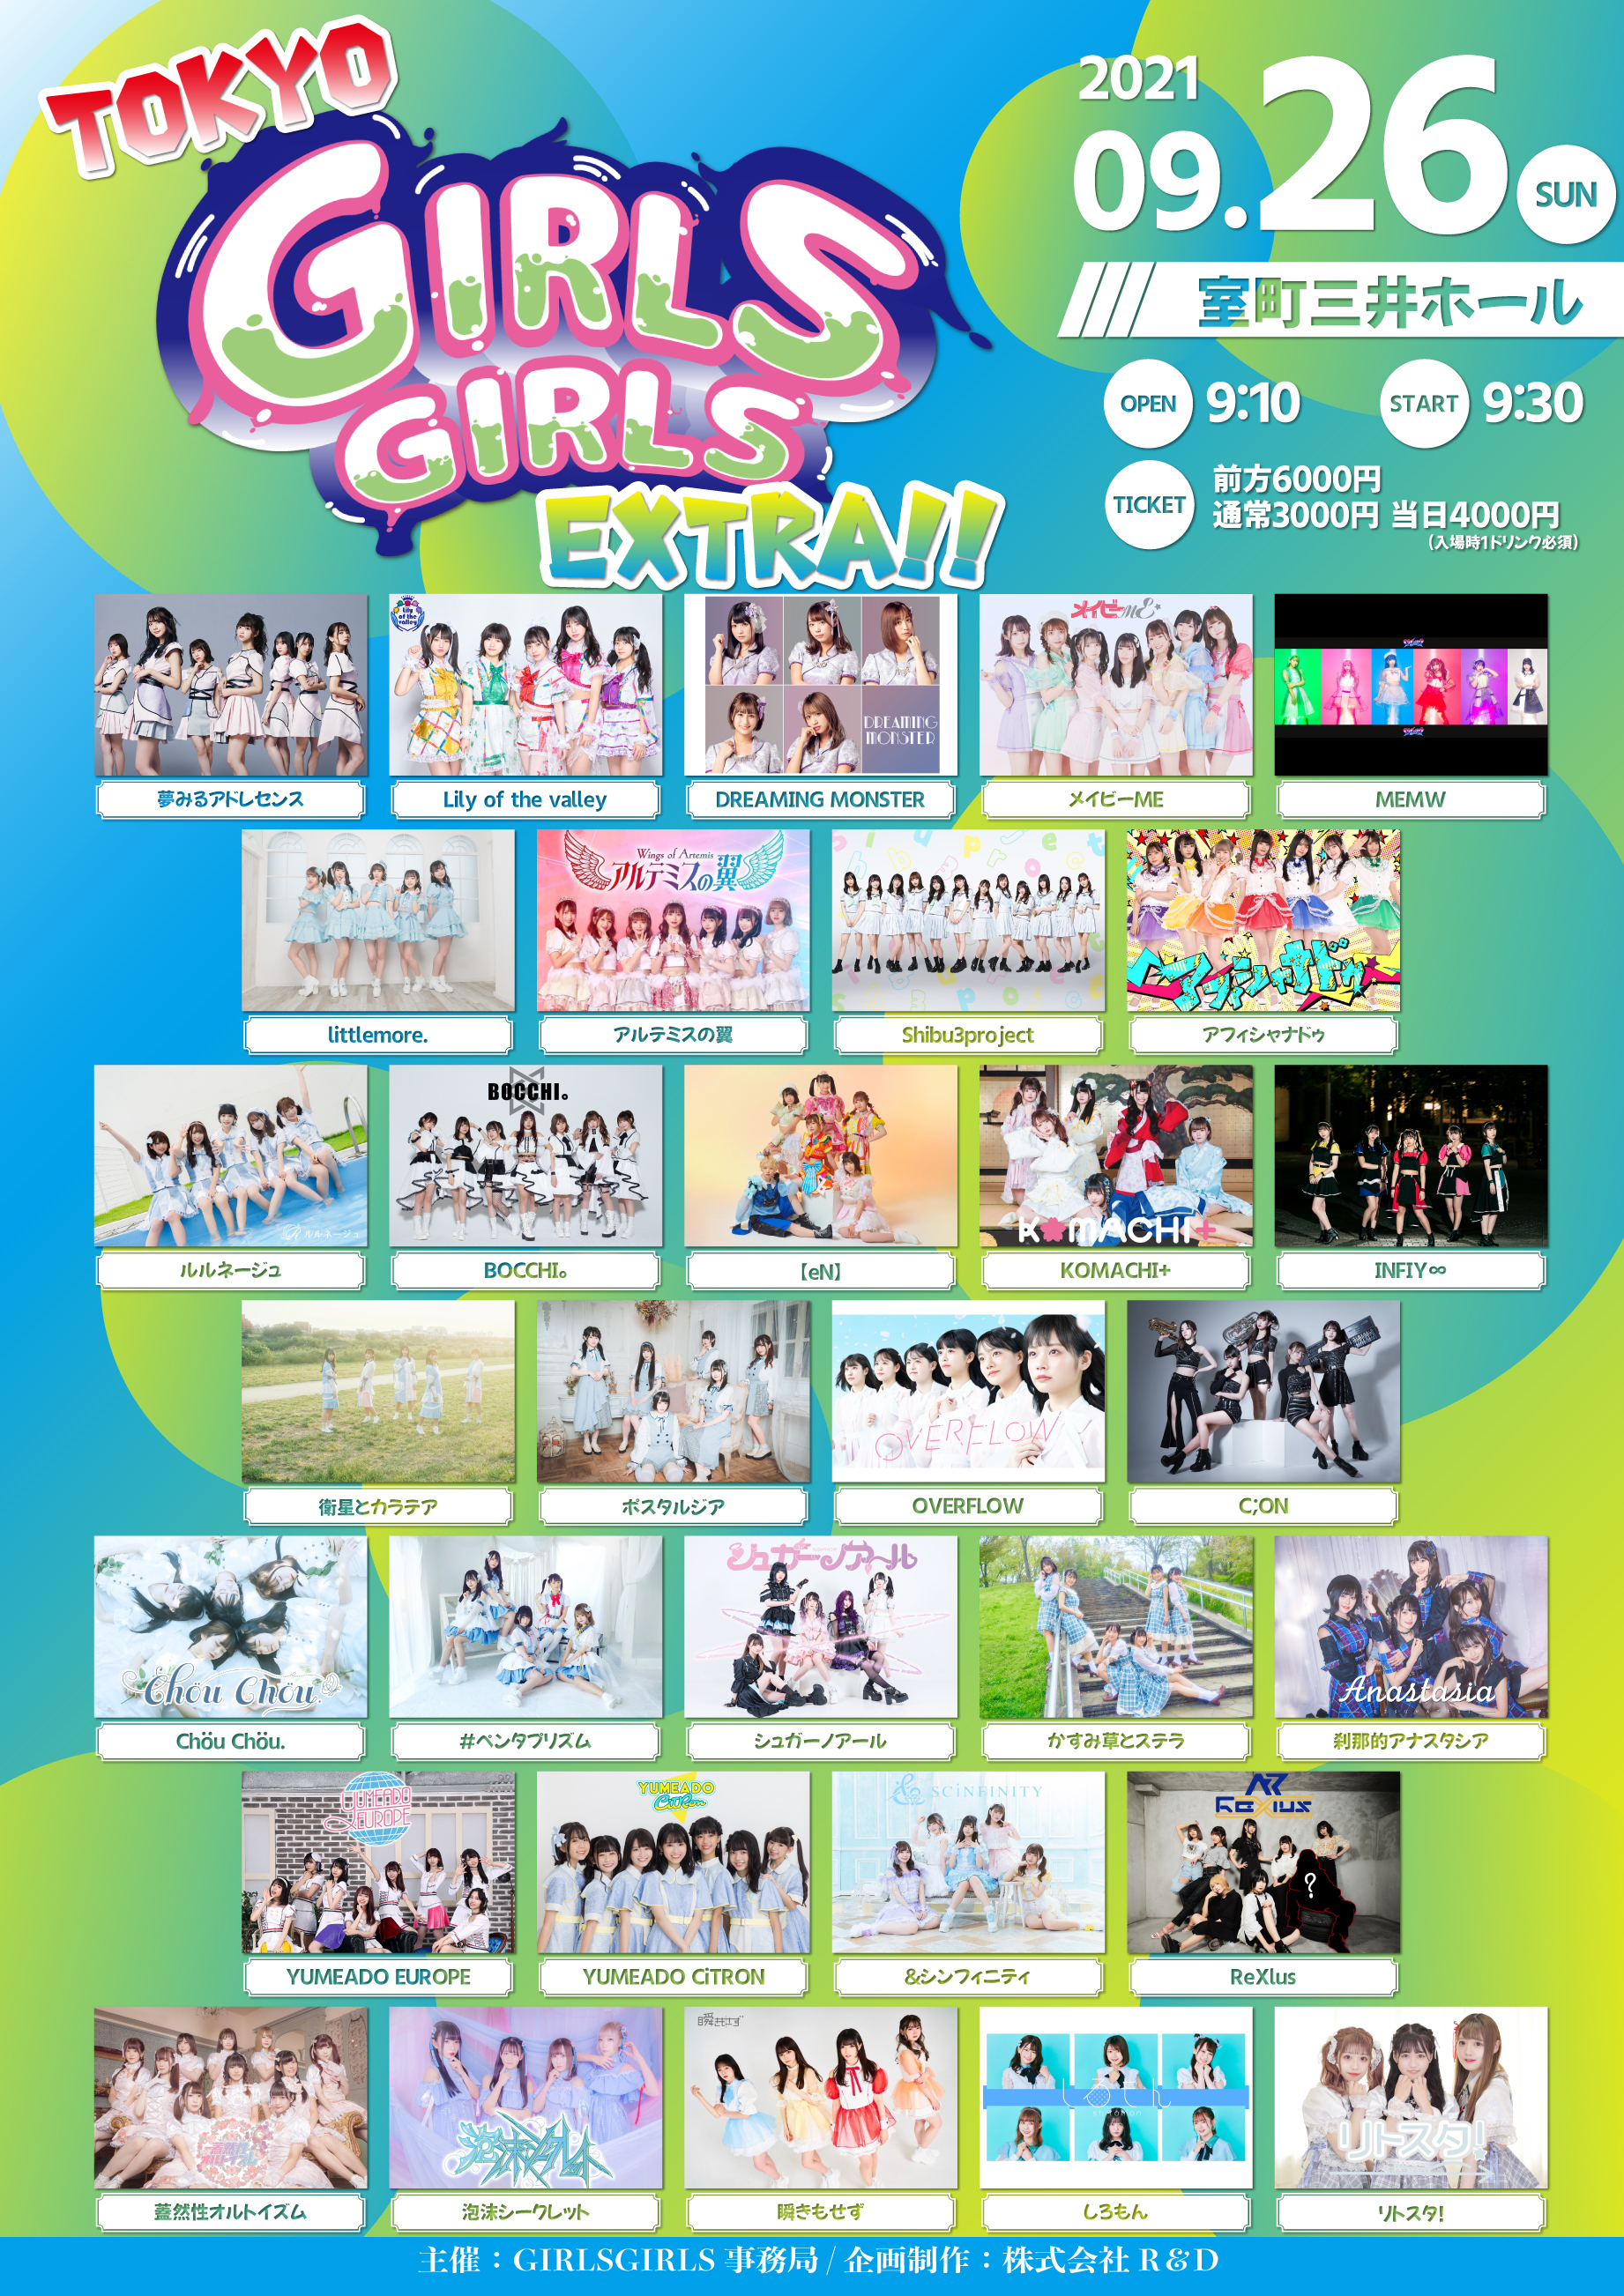 9/26(日) TOKYO GIRLS GIRLS extra!!